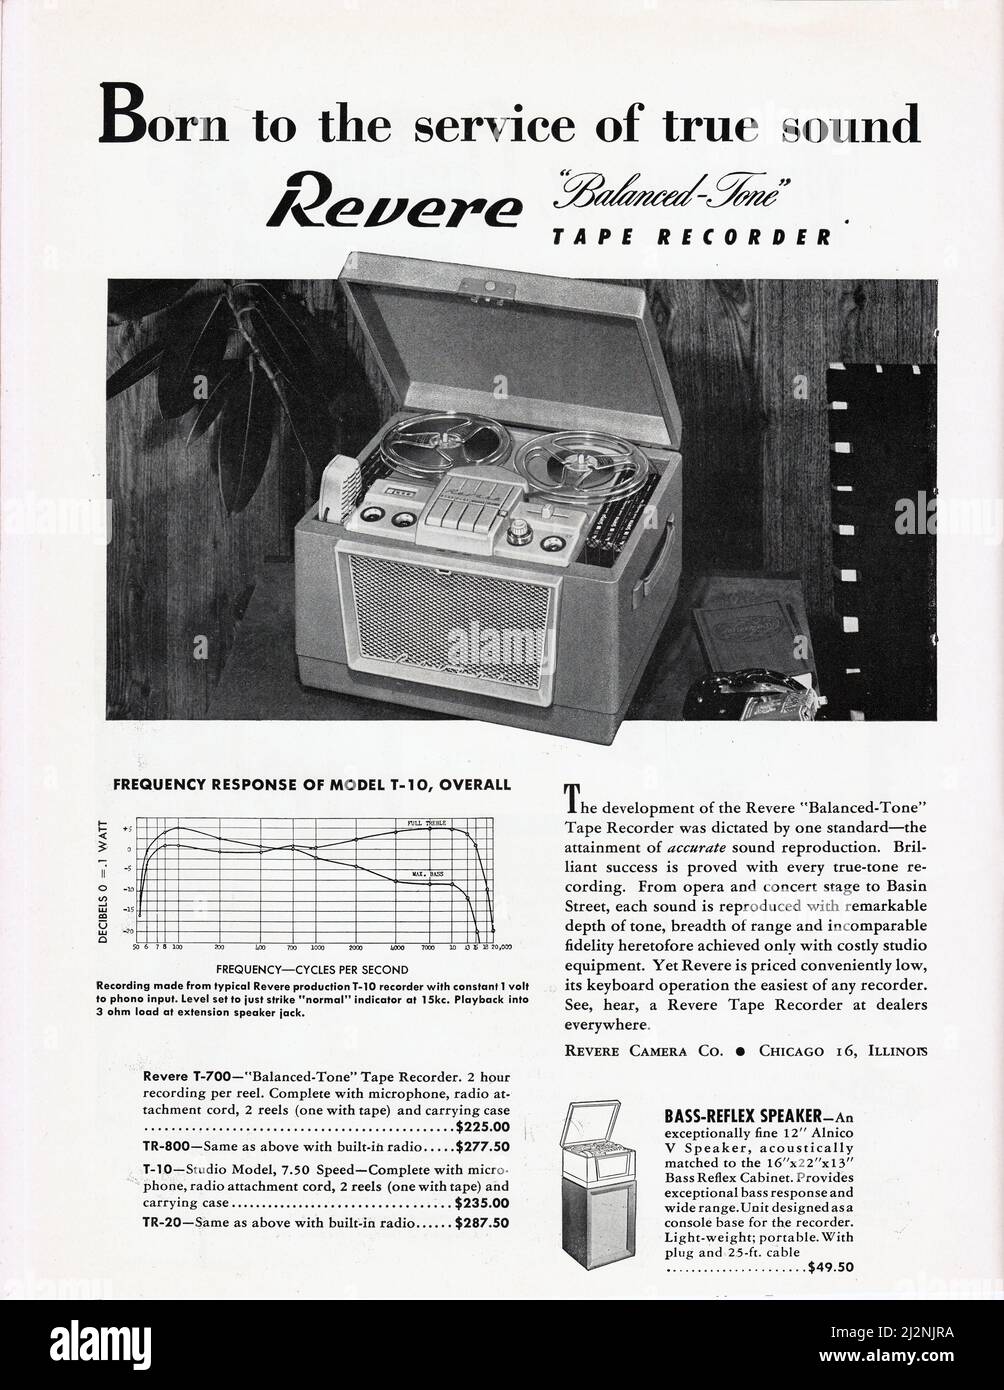 https://c8.alamy.com/comp/2J2NJRA/from-a-1954-music-audiophile-hi-fi-magazine-an-advertisement-for-a-revere-balanced-time-reel-to-reel-tape-recorder-2J2NJRA.jpg